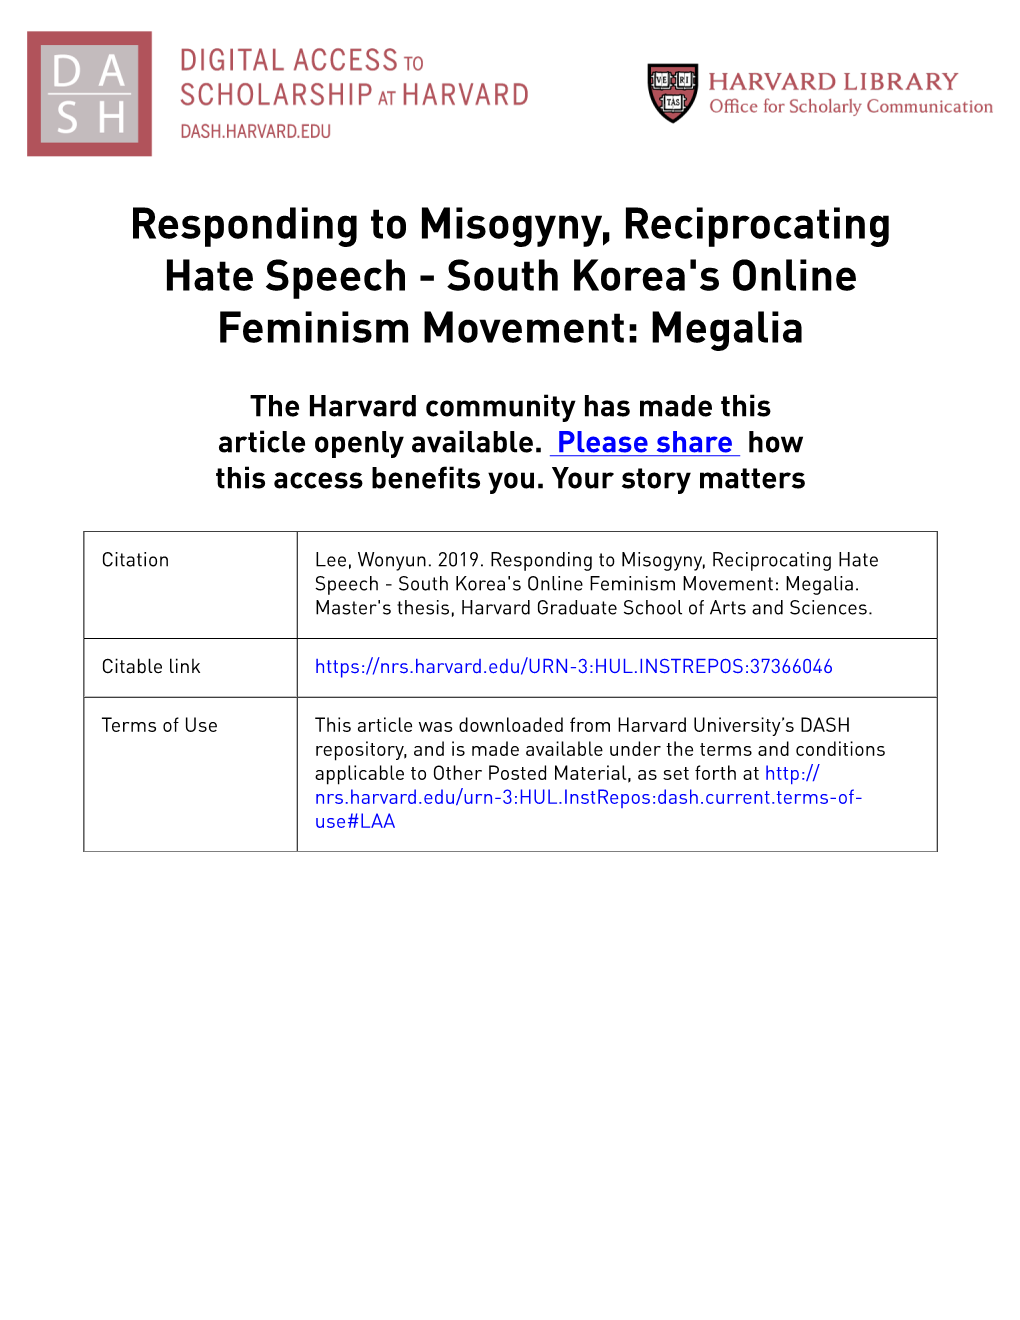 South Korea's Online Feminism Movement: Megalia